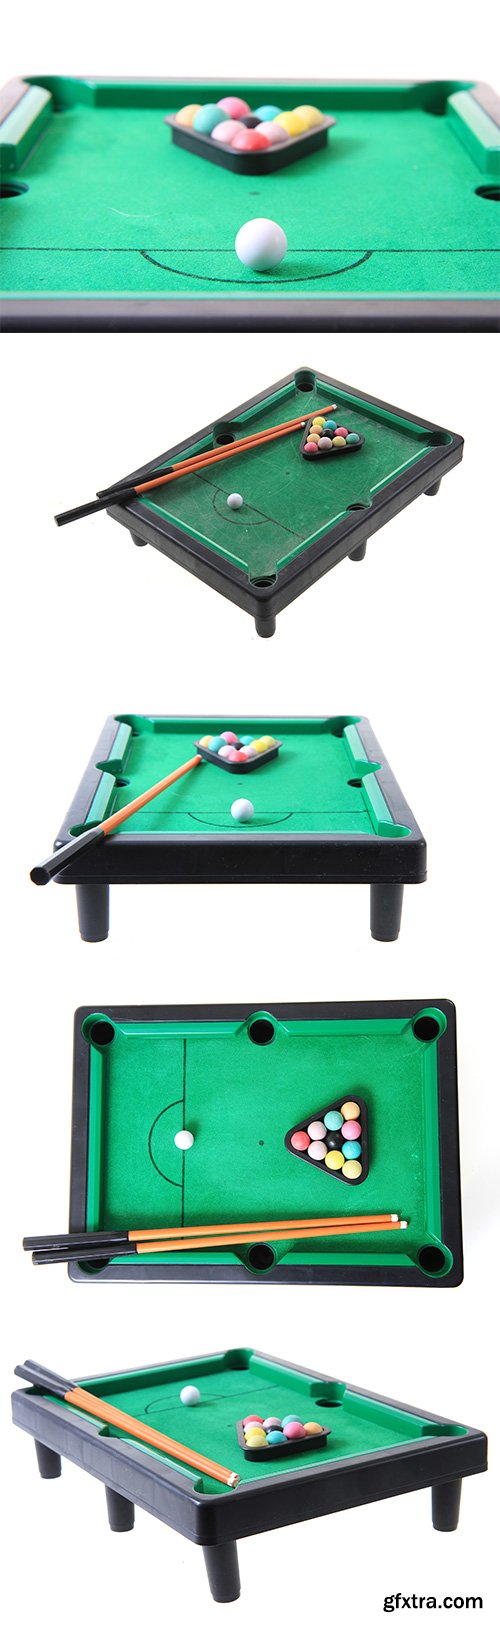 Billiard Toy Table Isolated - 6xJPGs